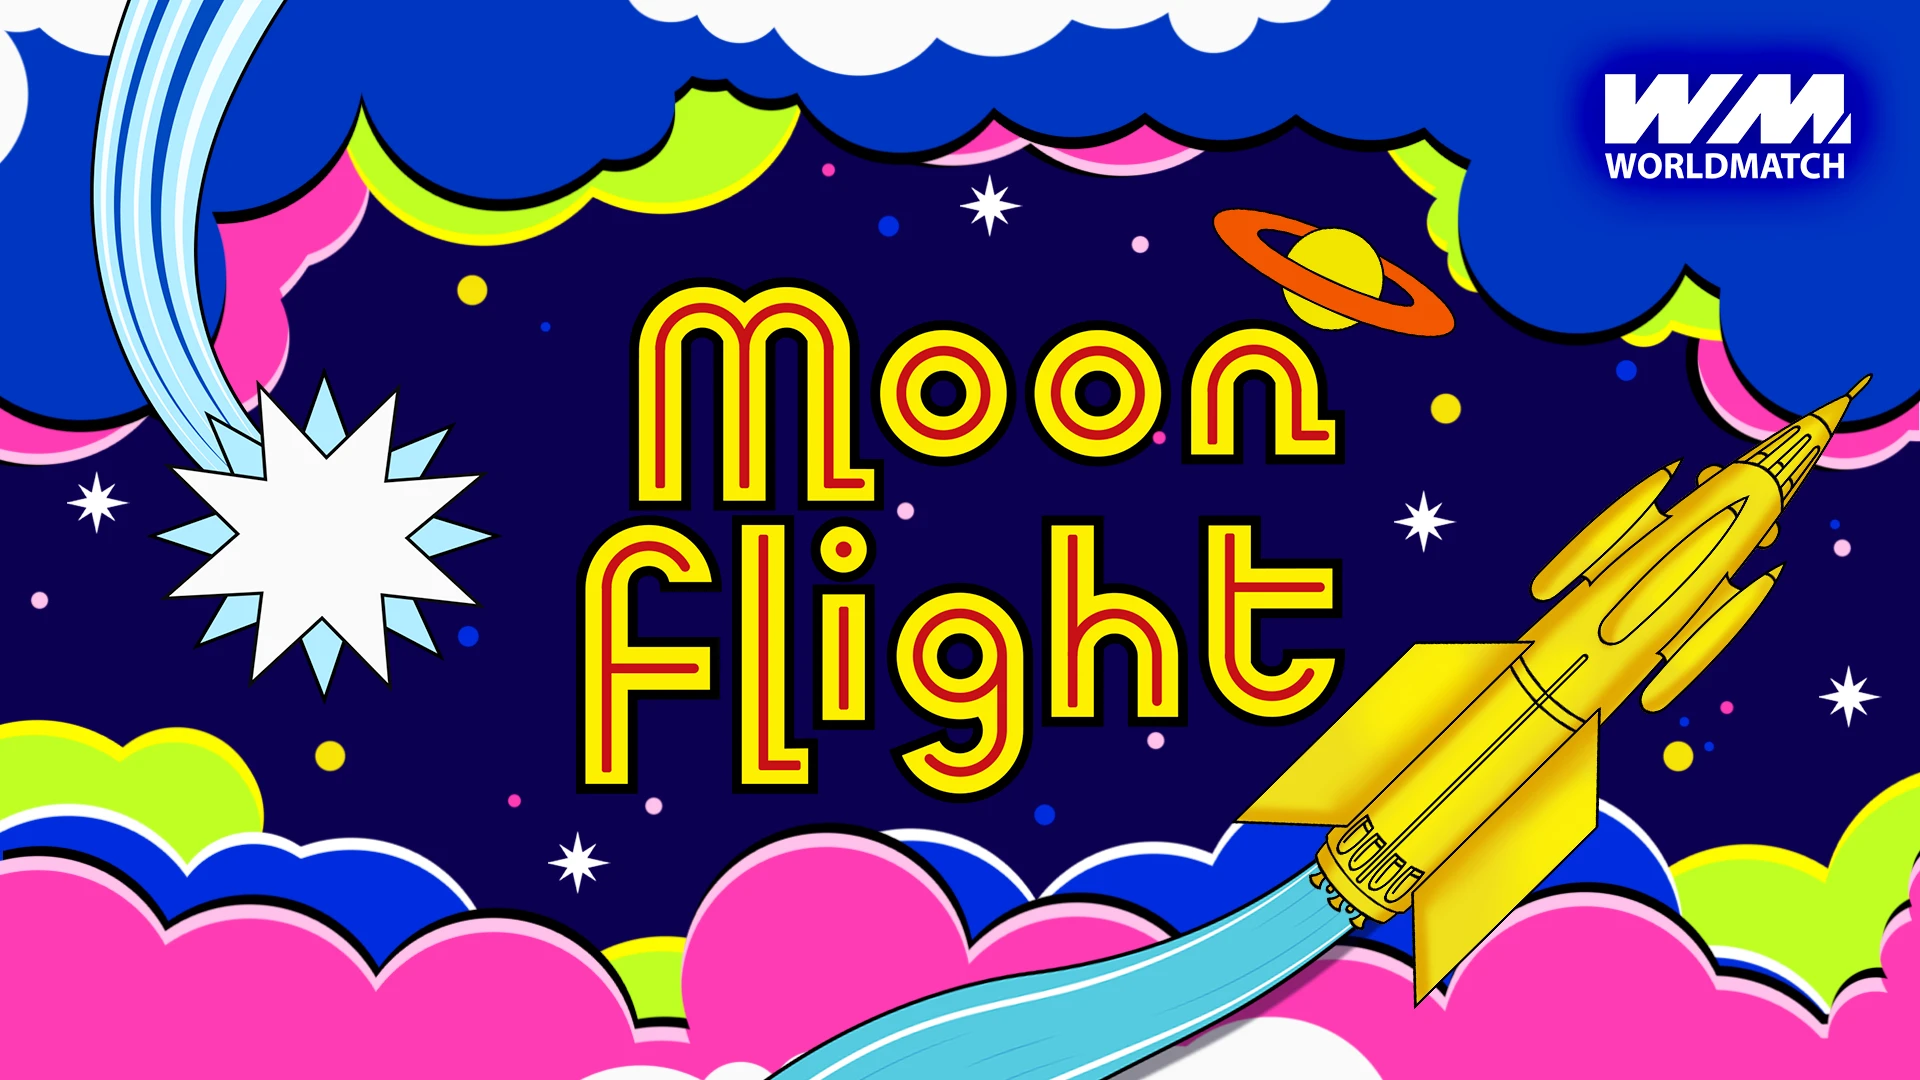 Worldmatch_Moon Flight